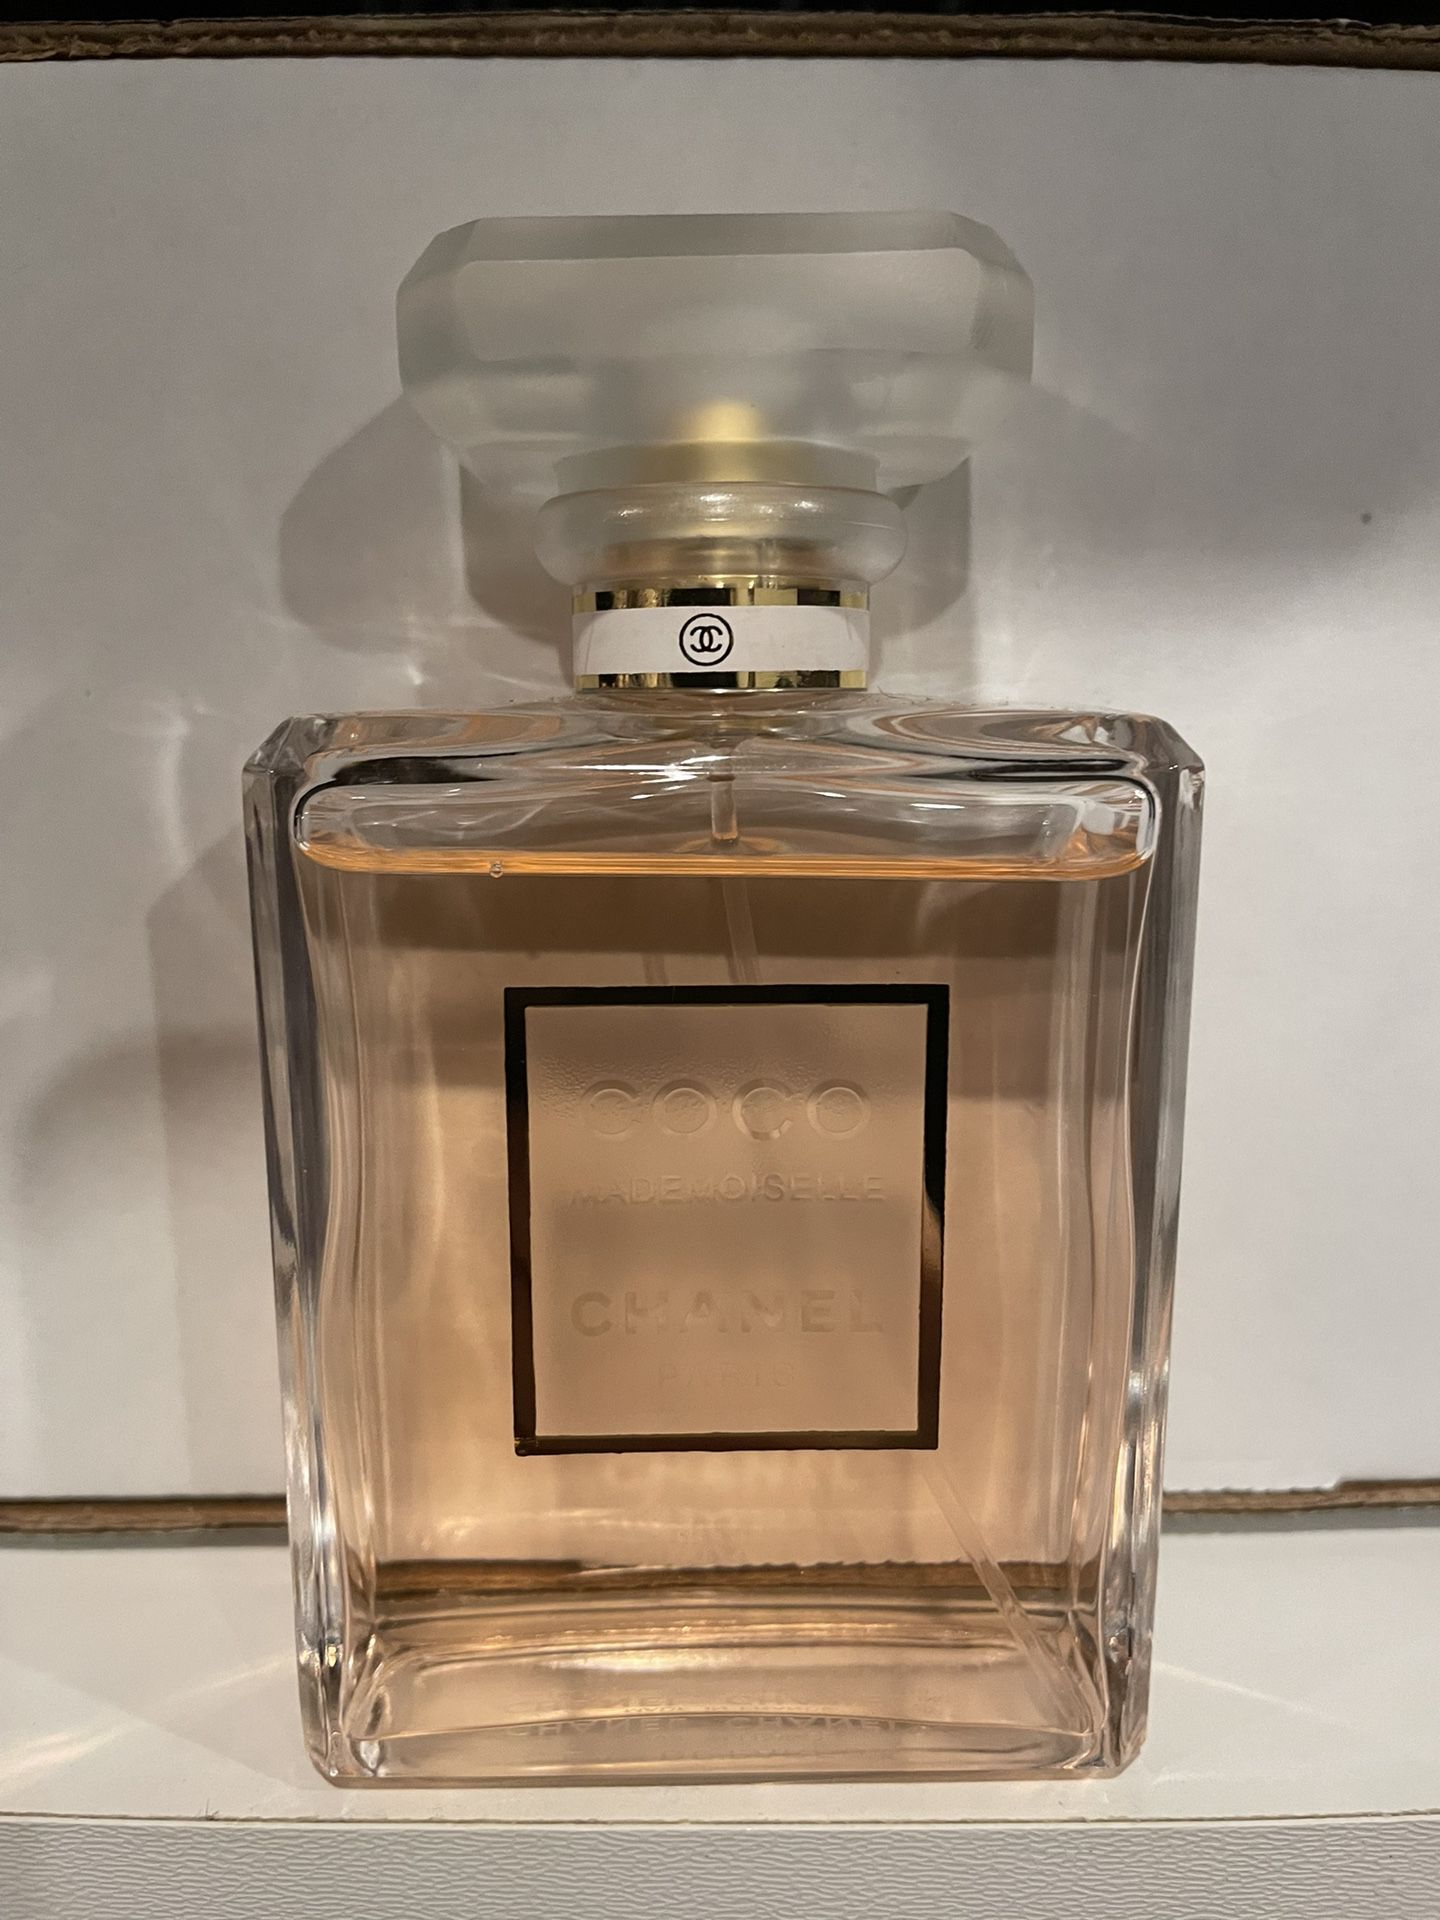 CHANEL Coco Mademoiselle Perfume